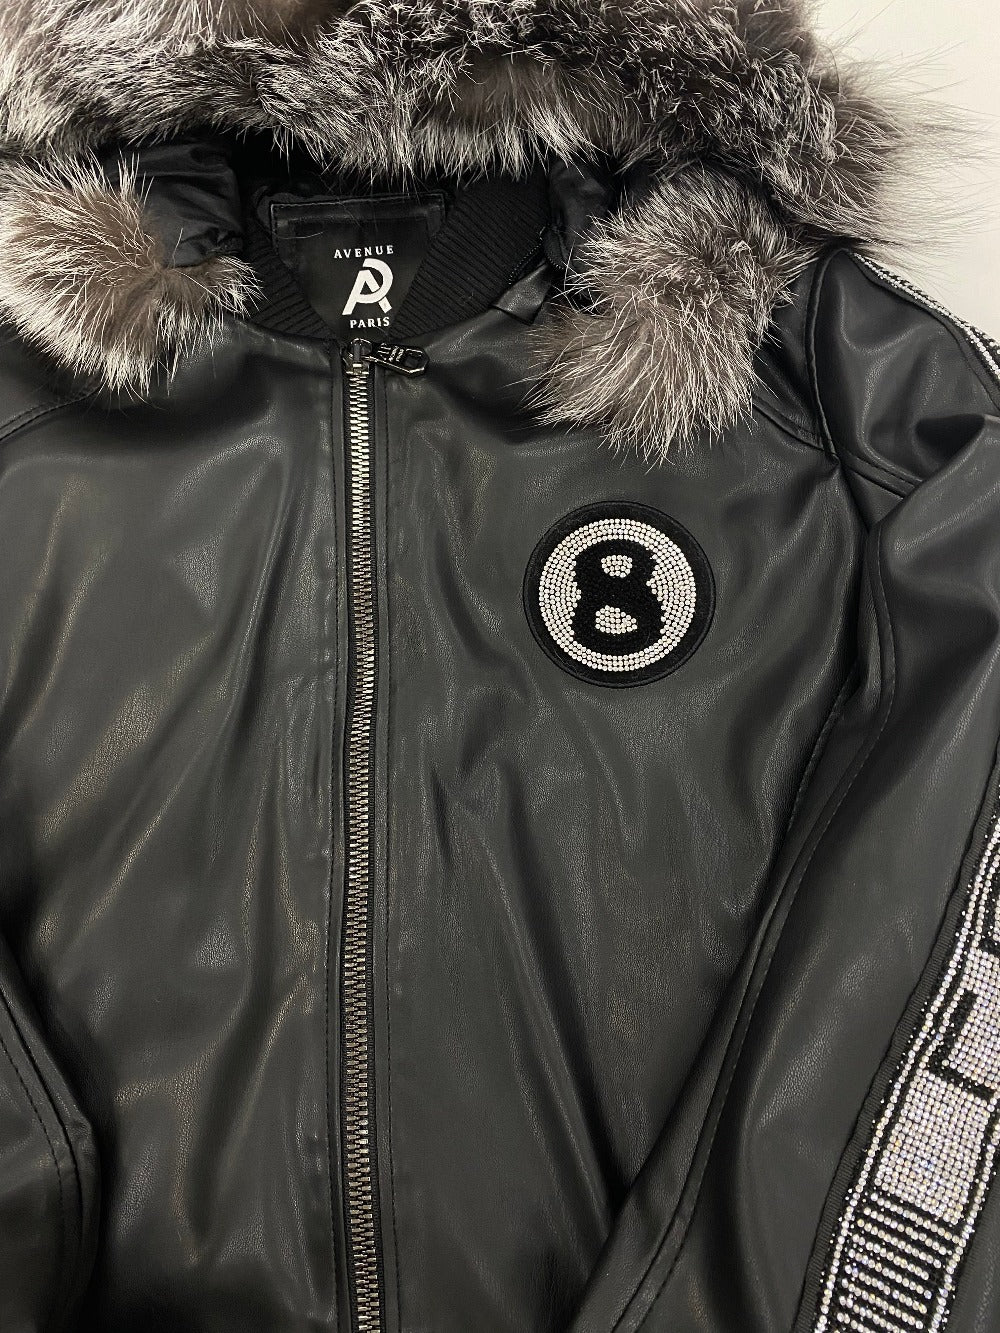 Avenue-Paris 8Ball Leather Jacket Black&Silver